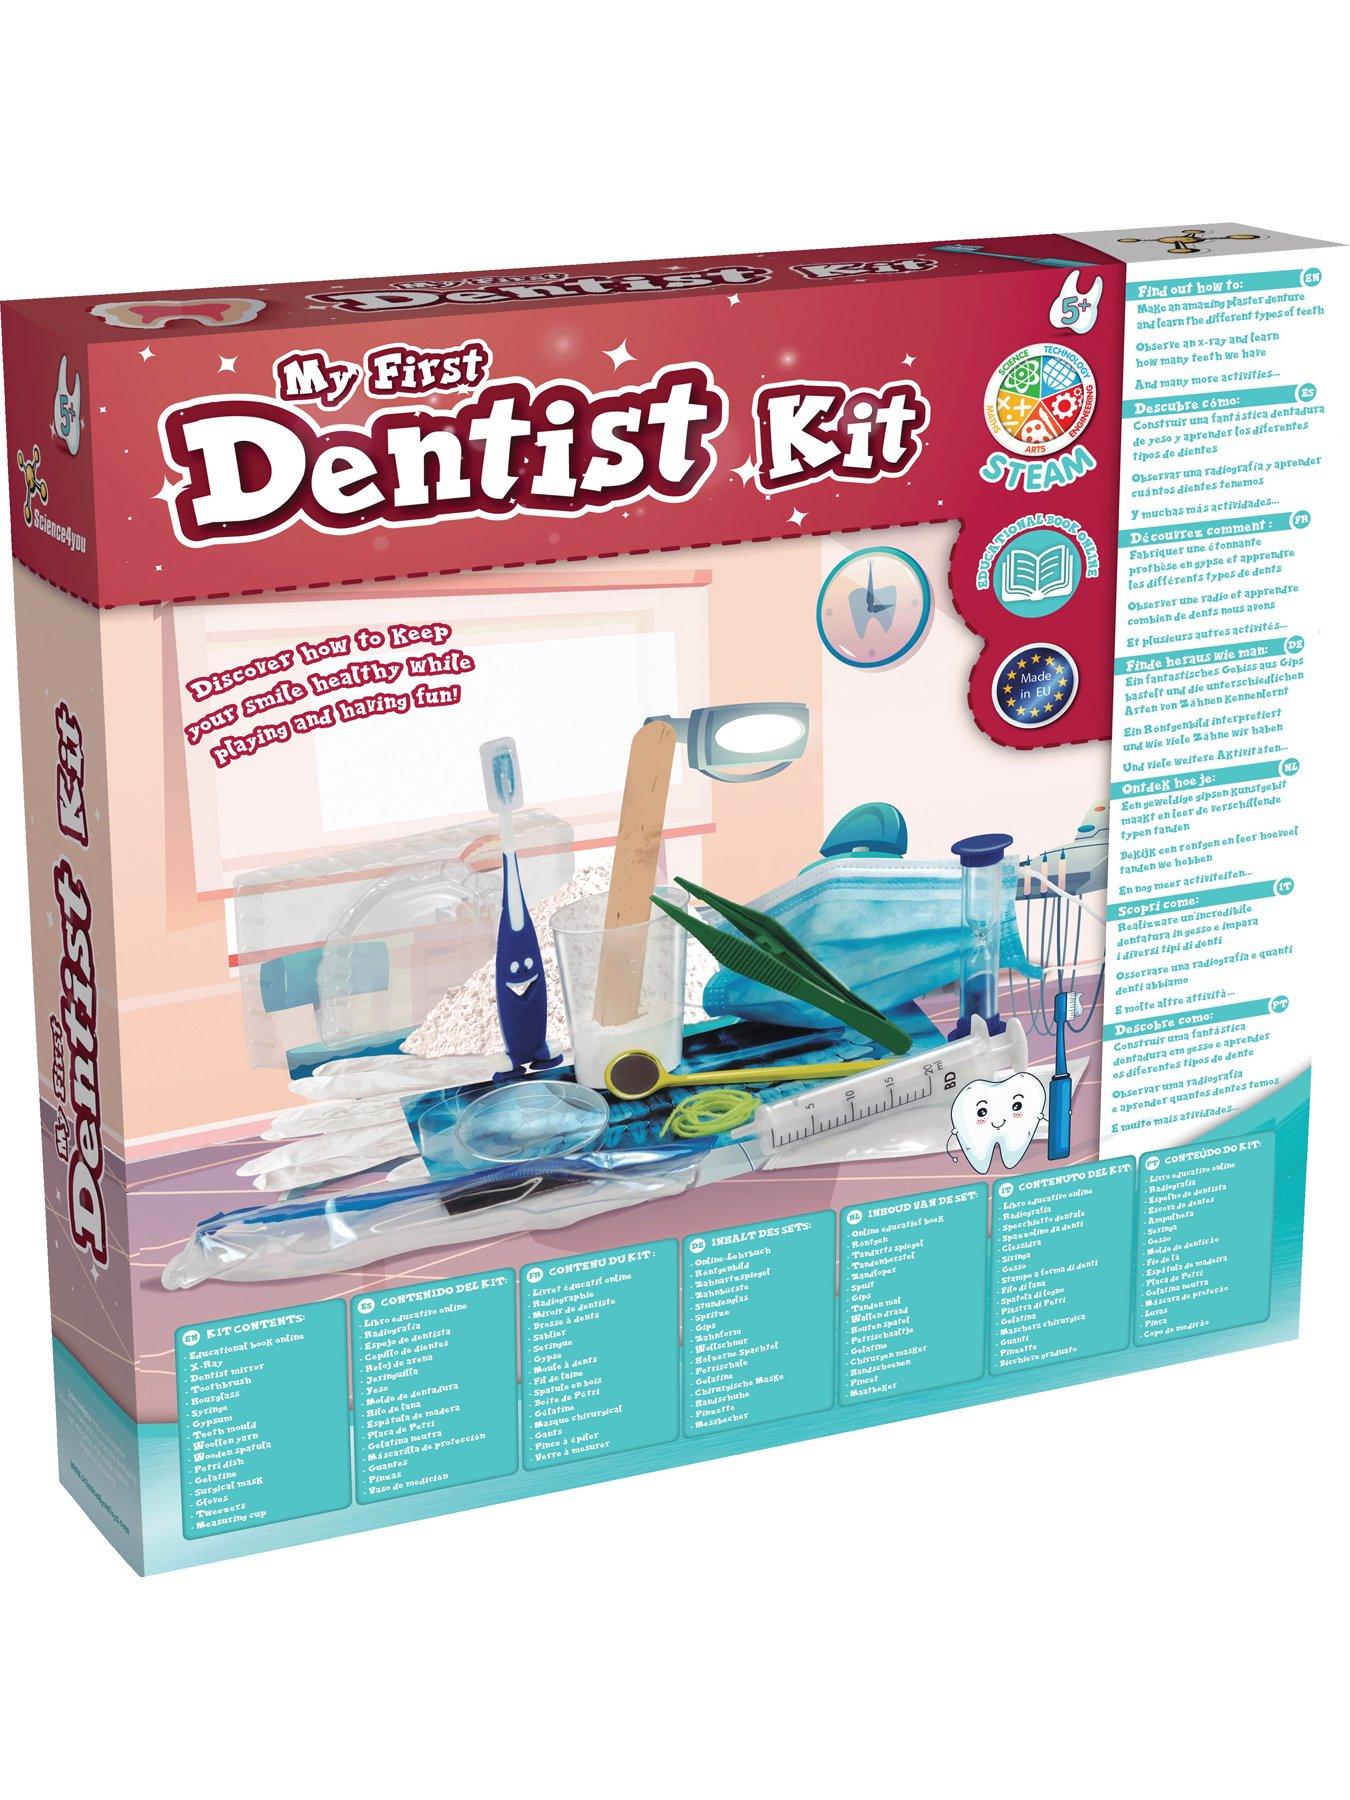 My New Dentist Kit! 